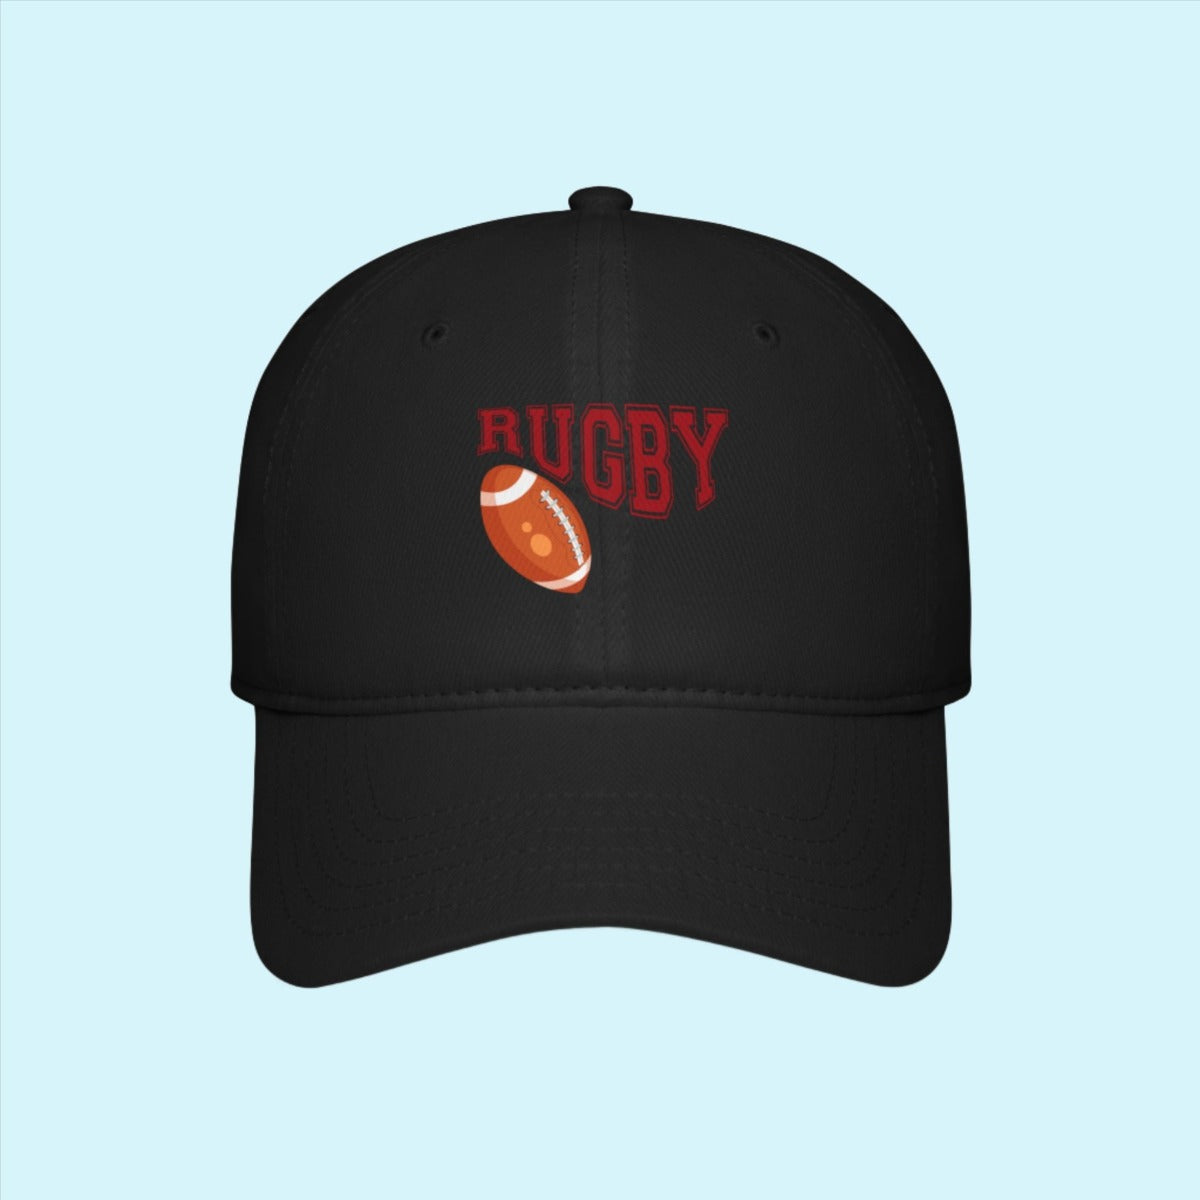 Black Rugby Theme Baseball Cap